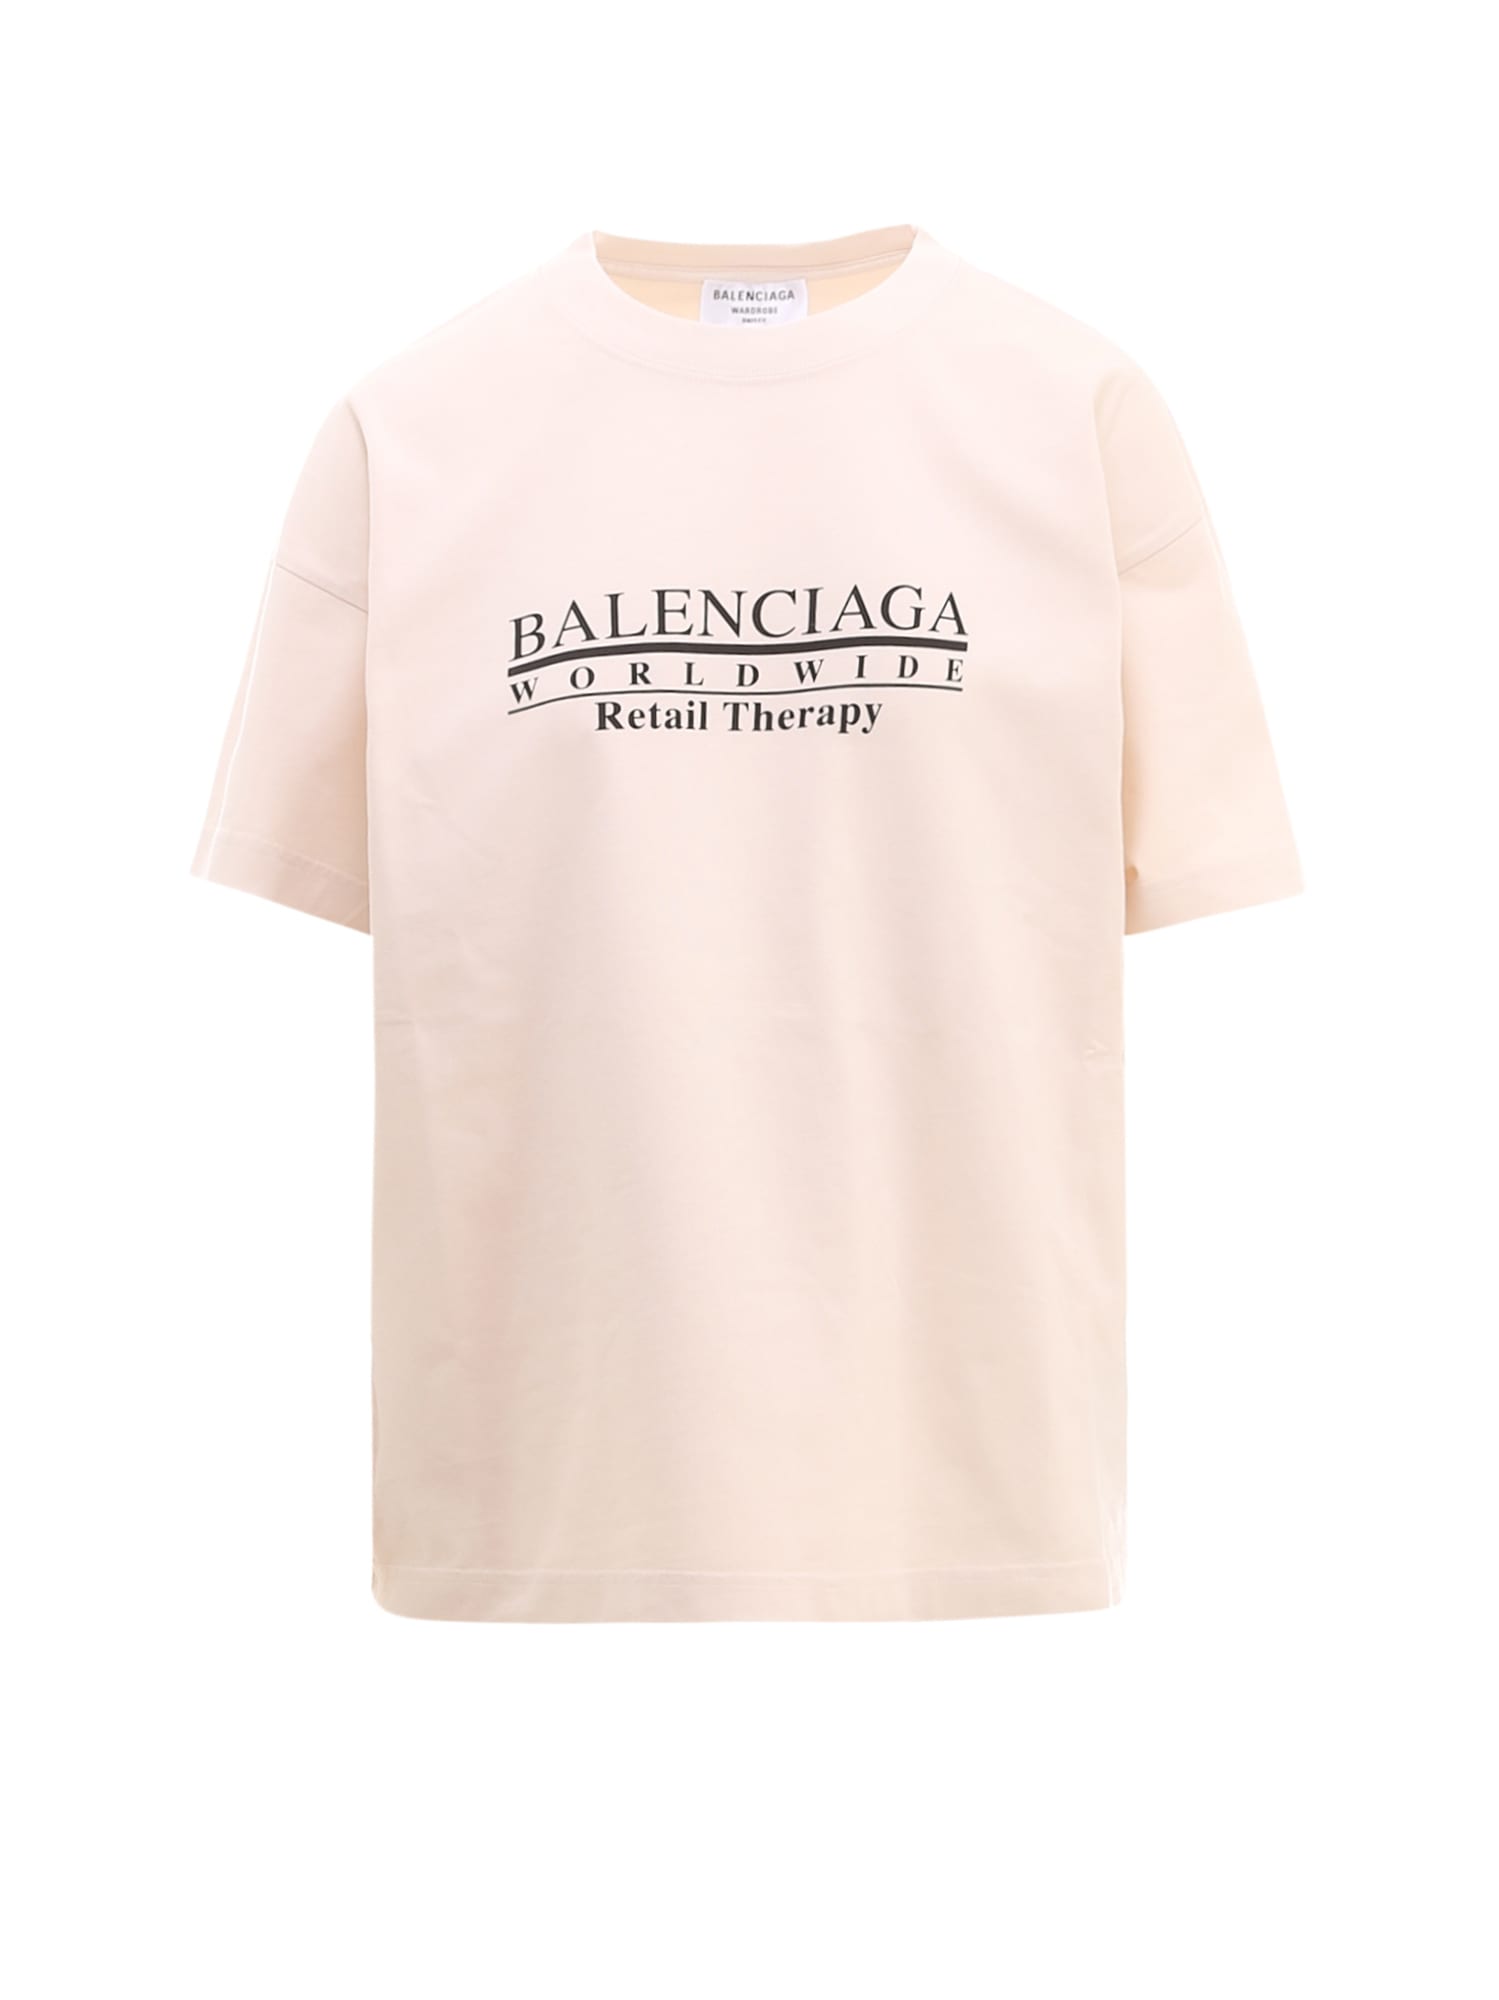 Balenciaga Retail Therapy T-shirt